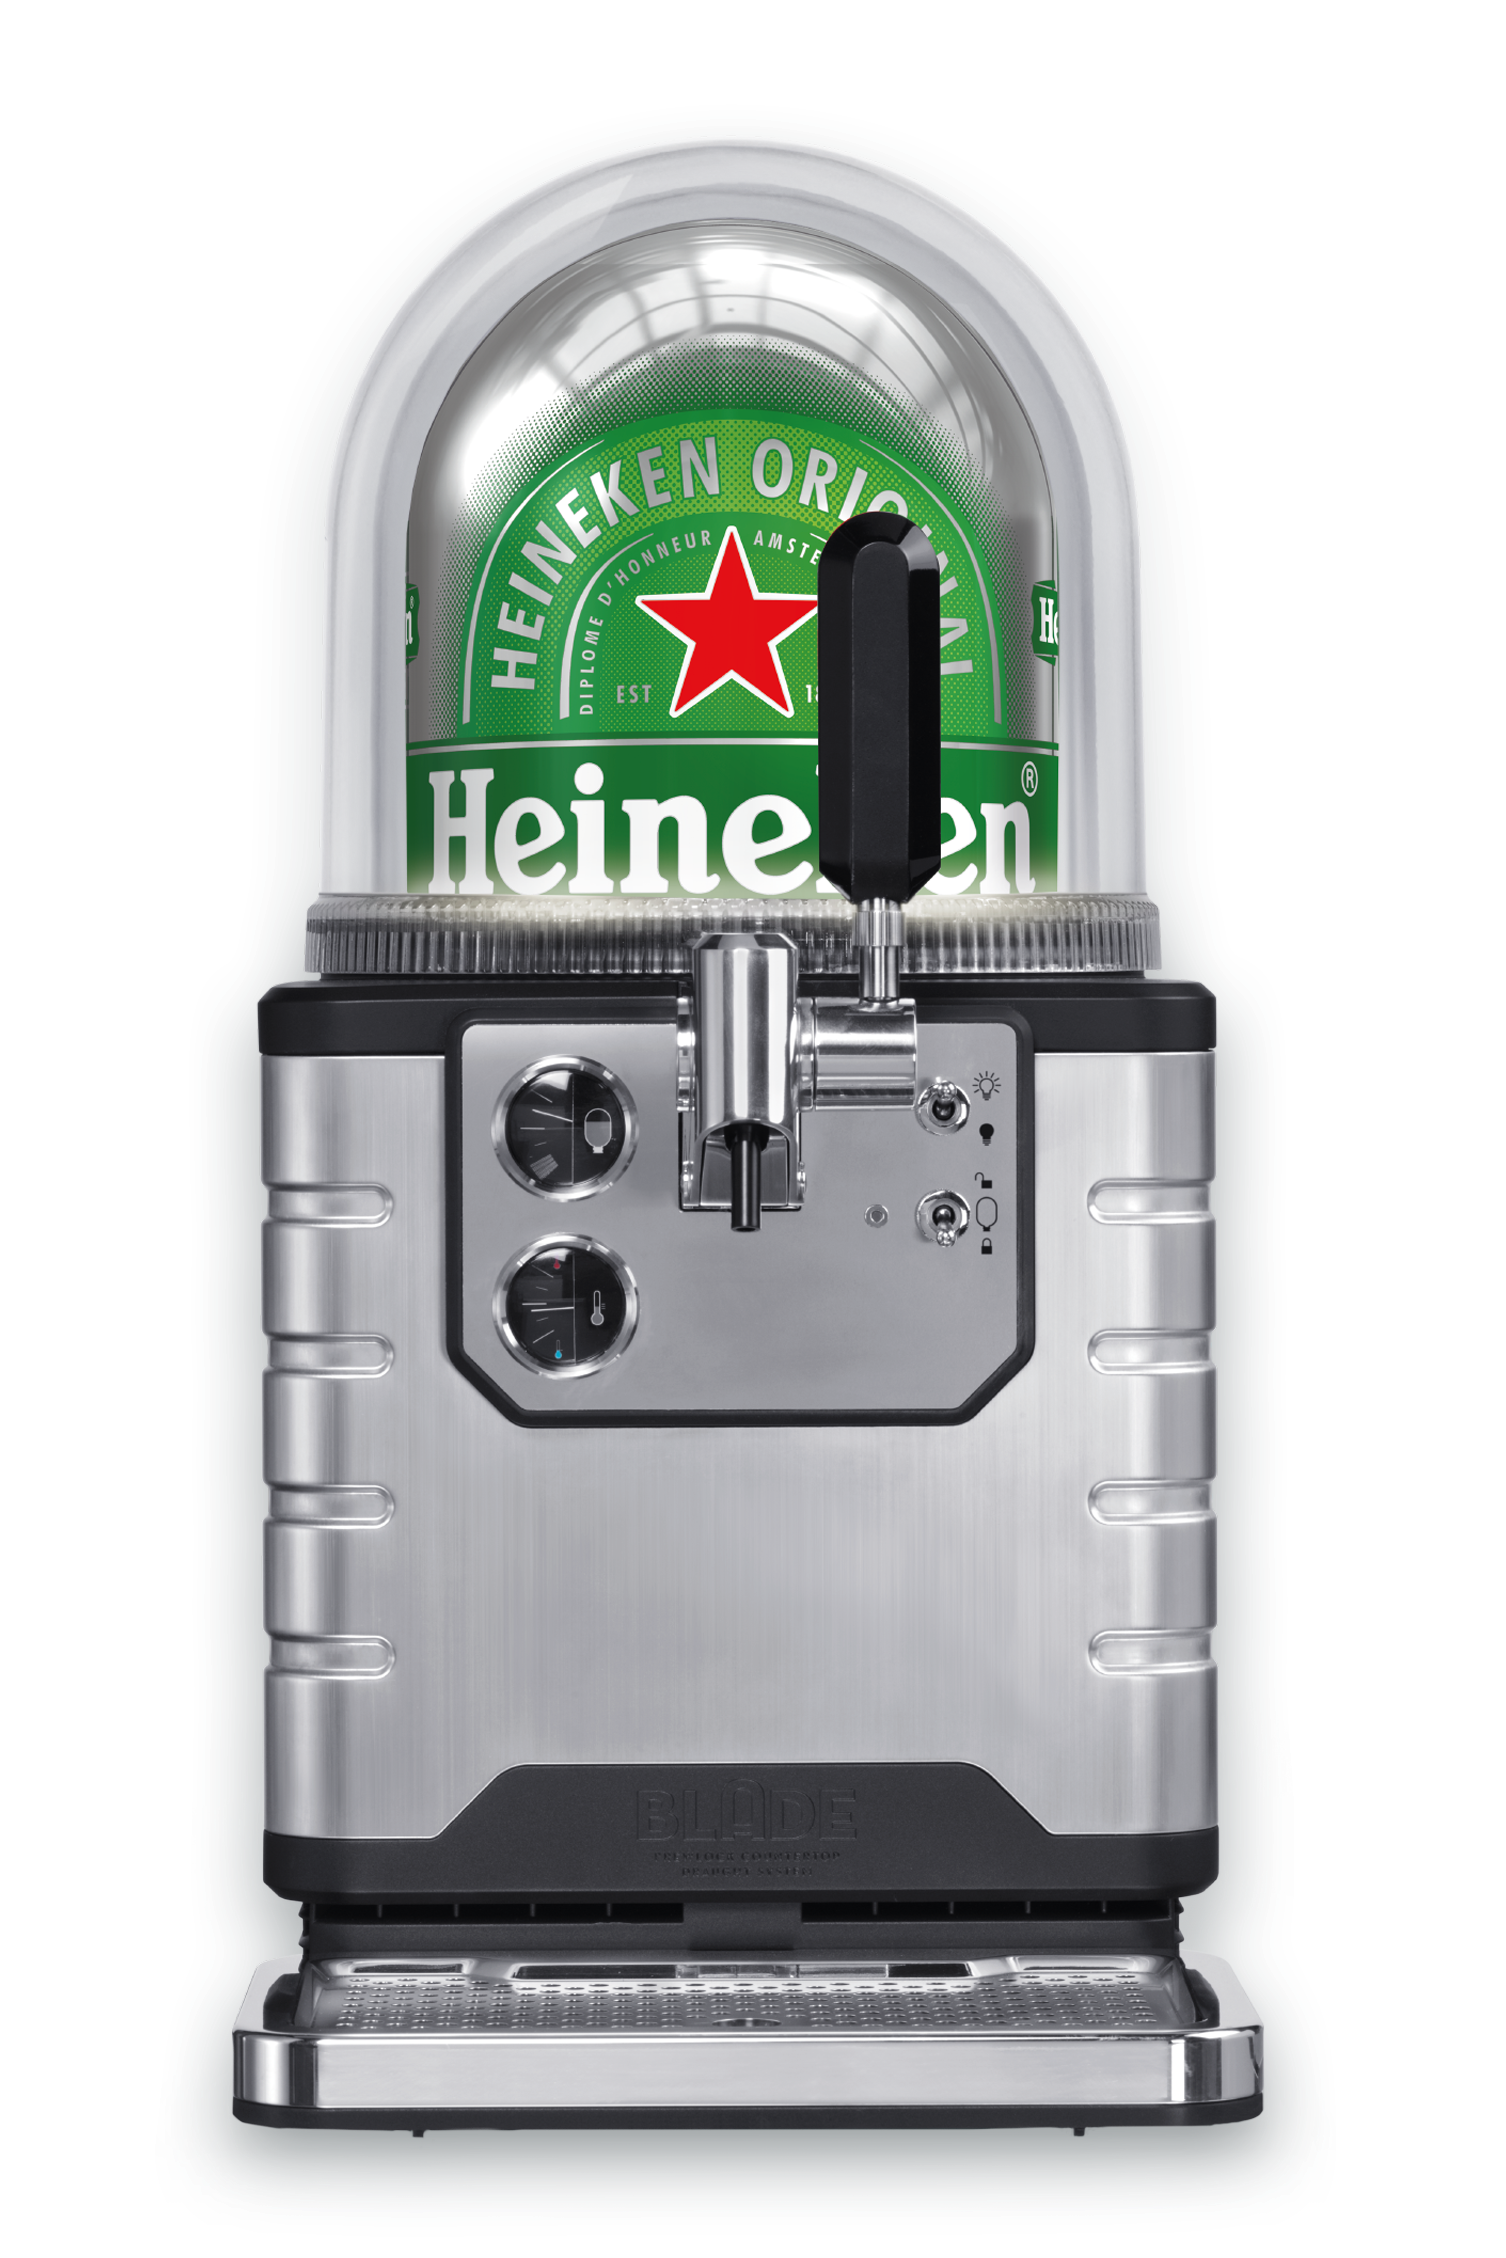 Heineken BeerTender tube xTender: hacking kit to reuse the tubes for up to  4 kegs, save money & landfill. : u/SUBMERGit